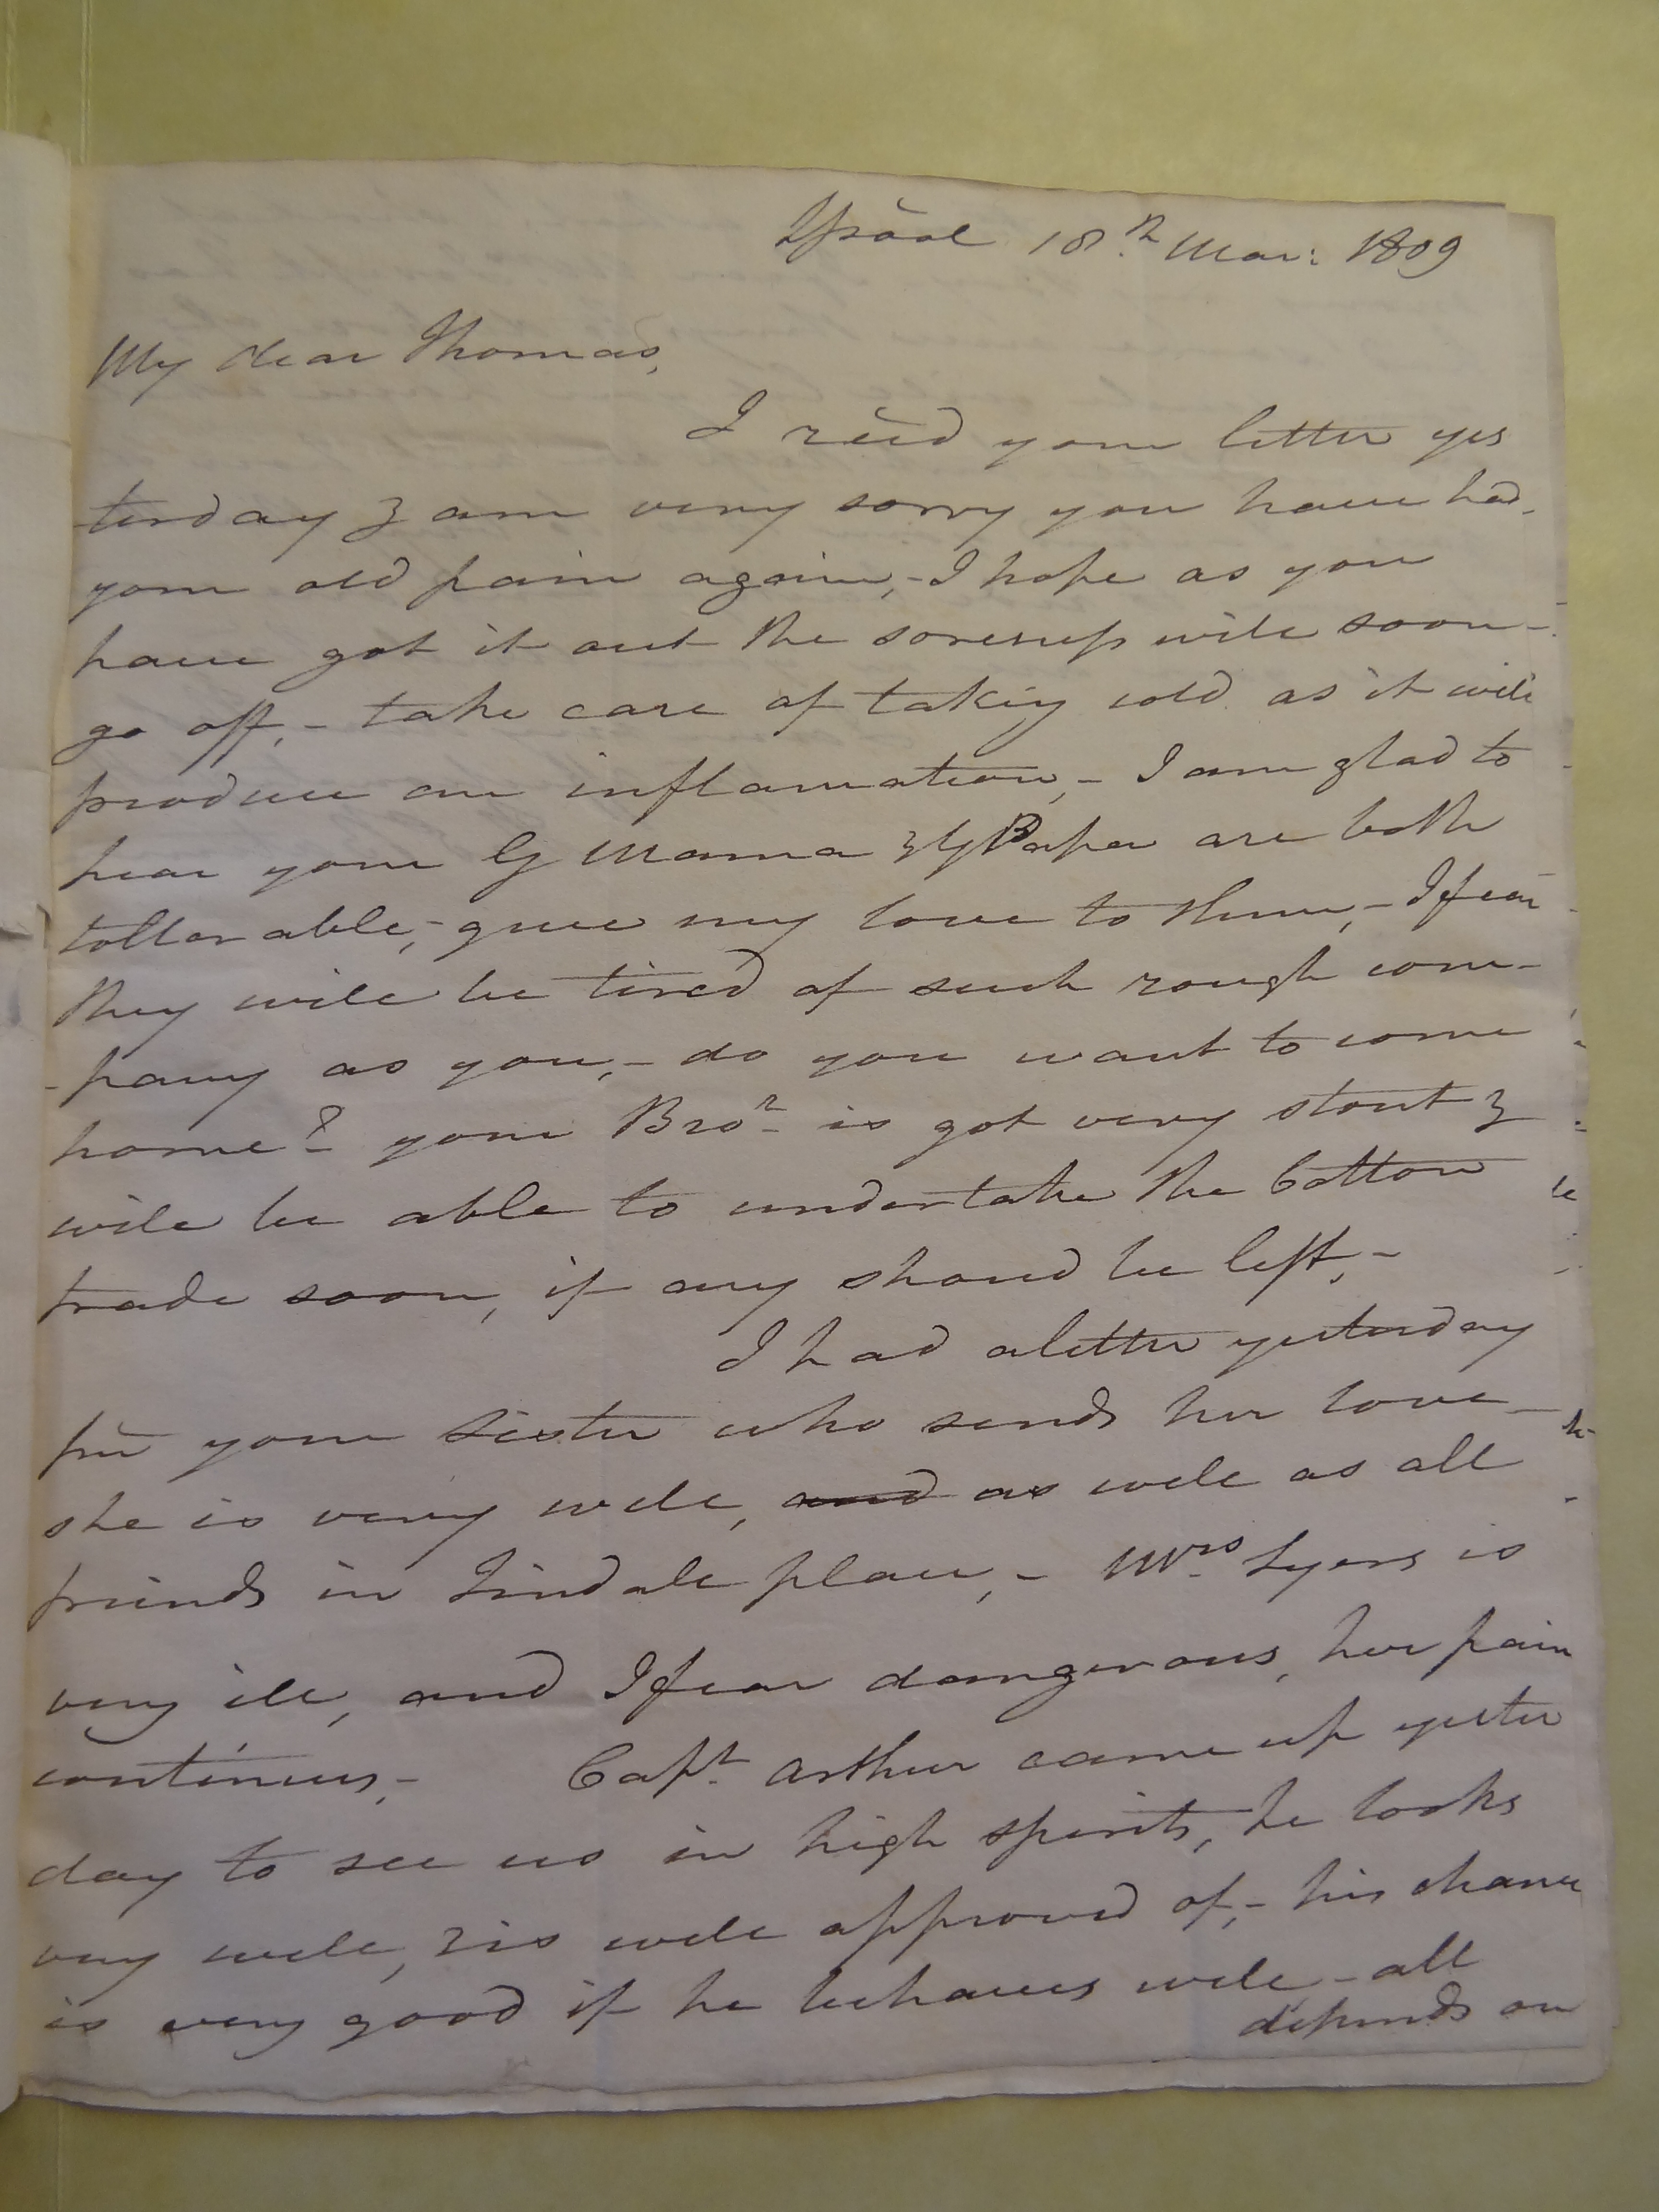 Image #1 of letter: Thomas Bateman (senior) to Thomas Bateman (junior), 18 March 1809